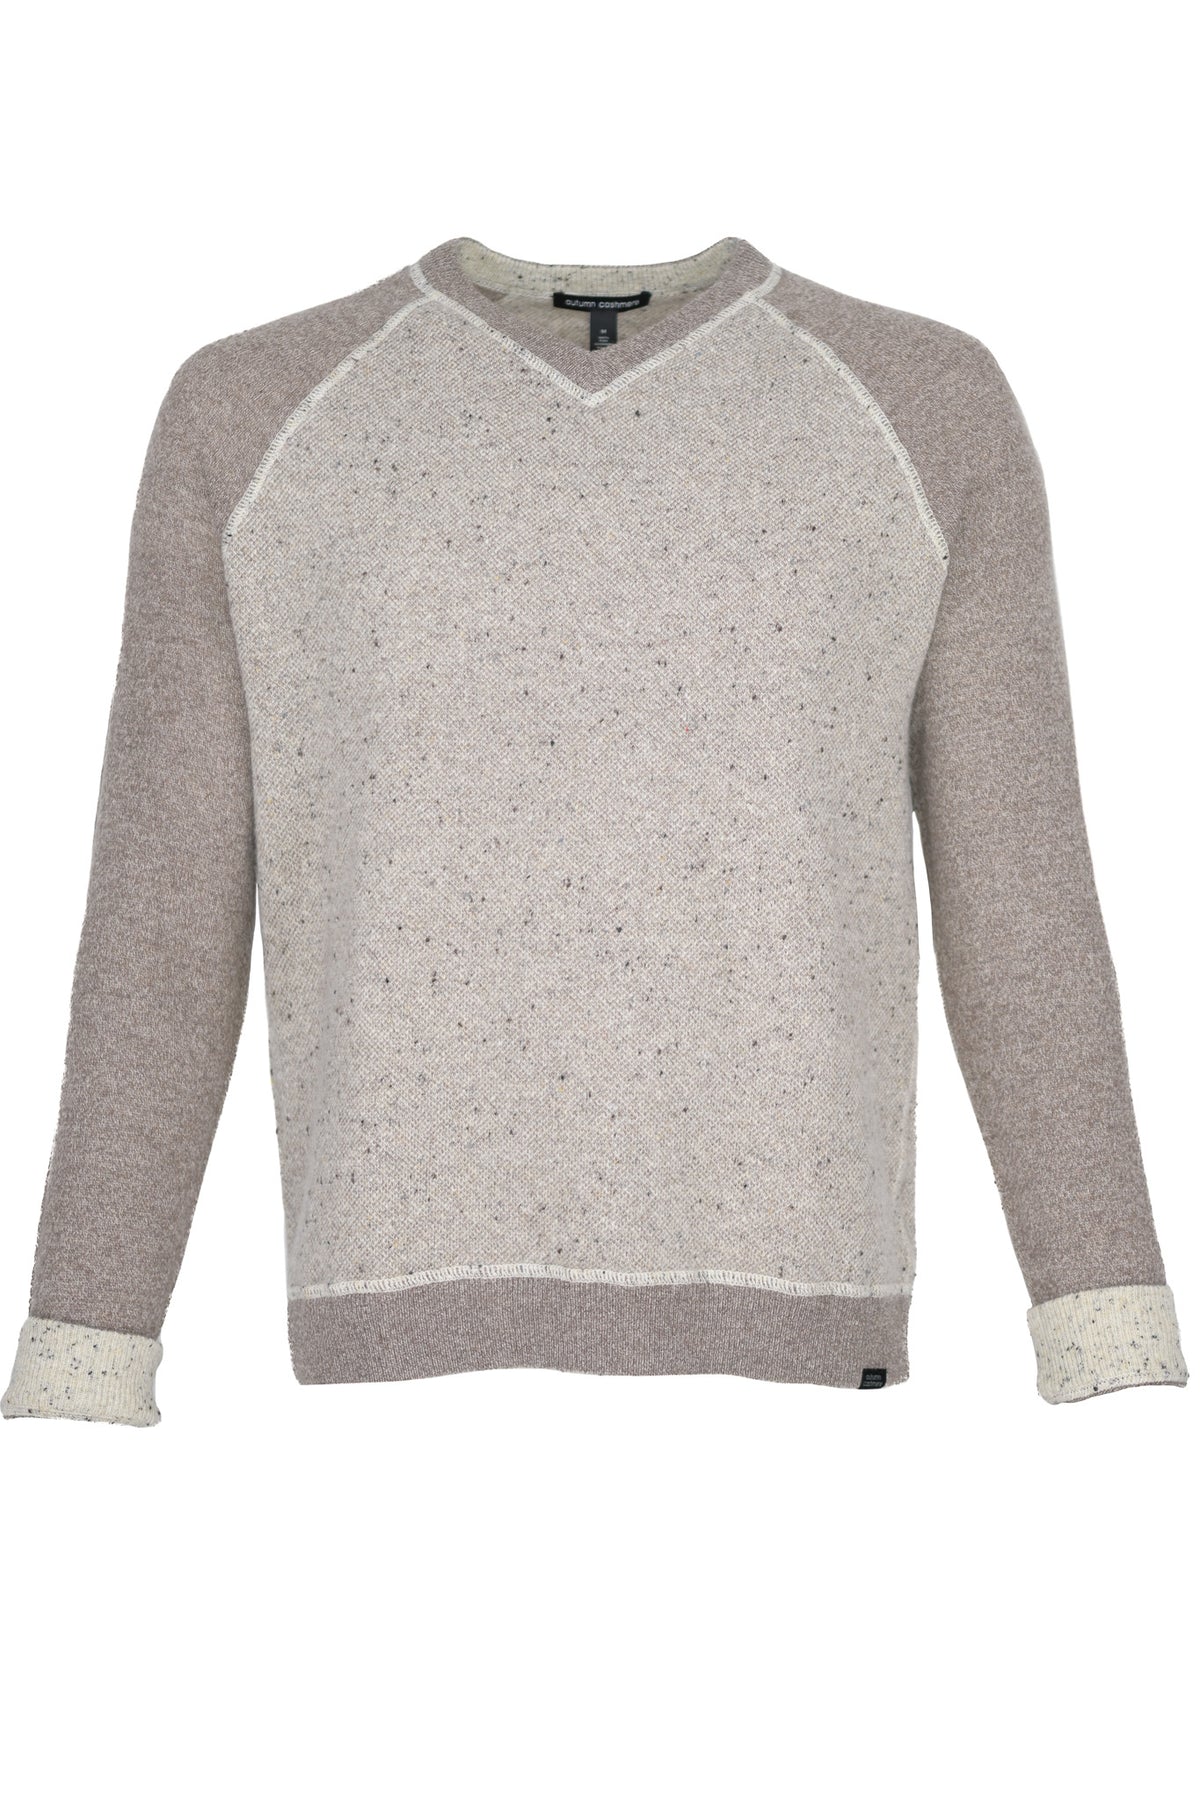 Autumn Cashmere V-Neck Sweater